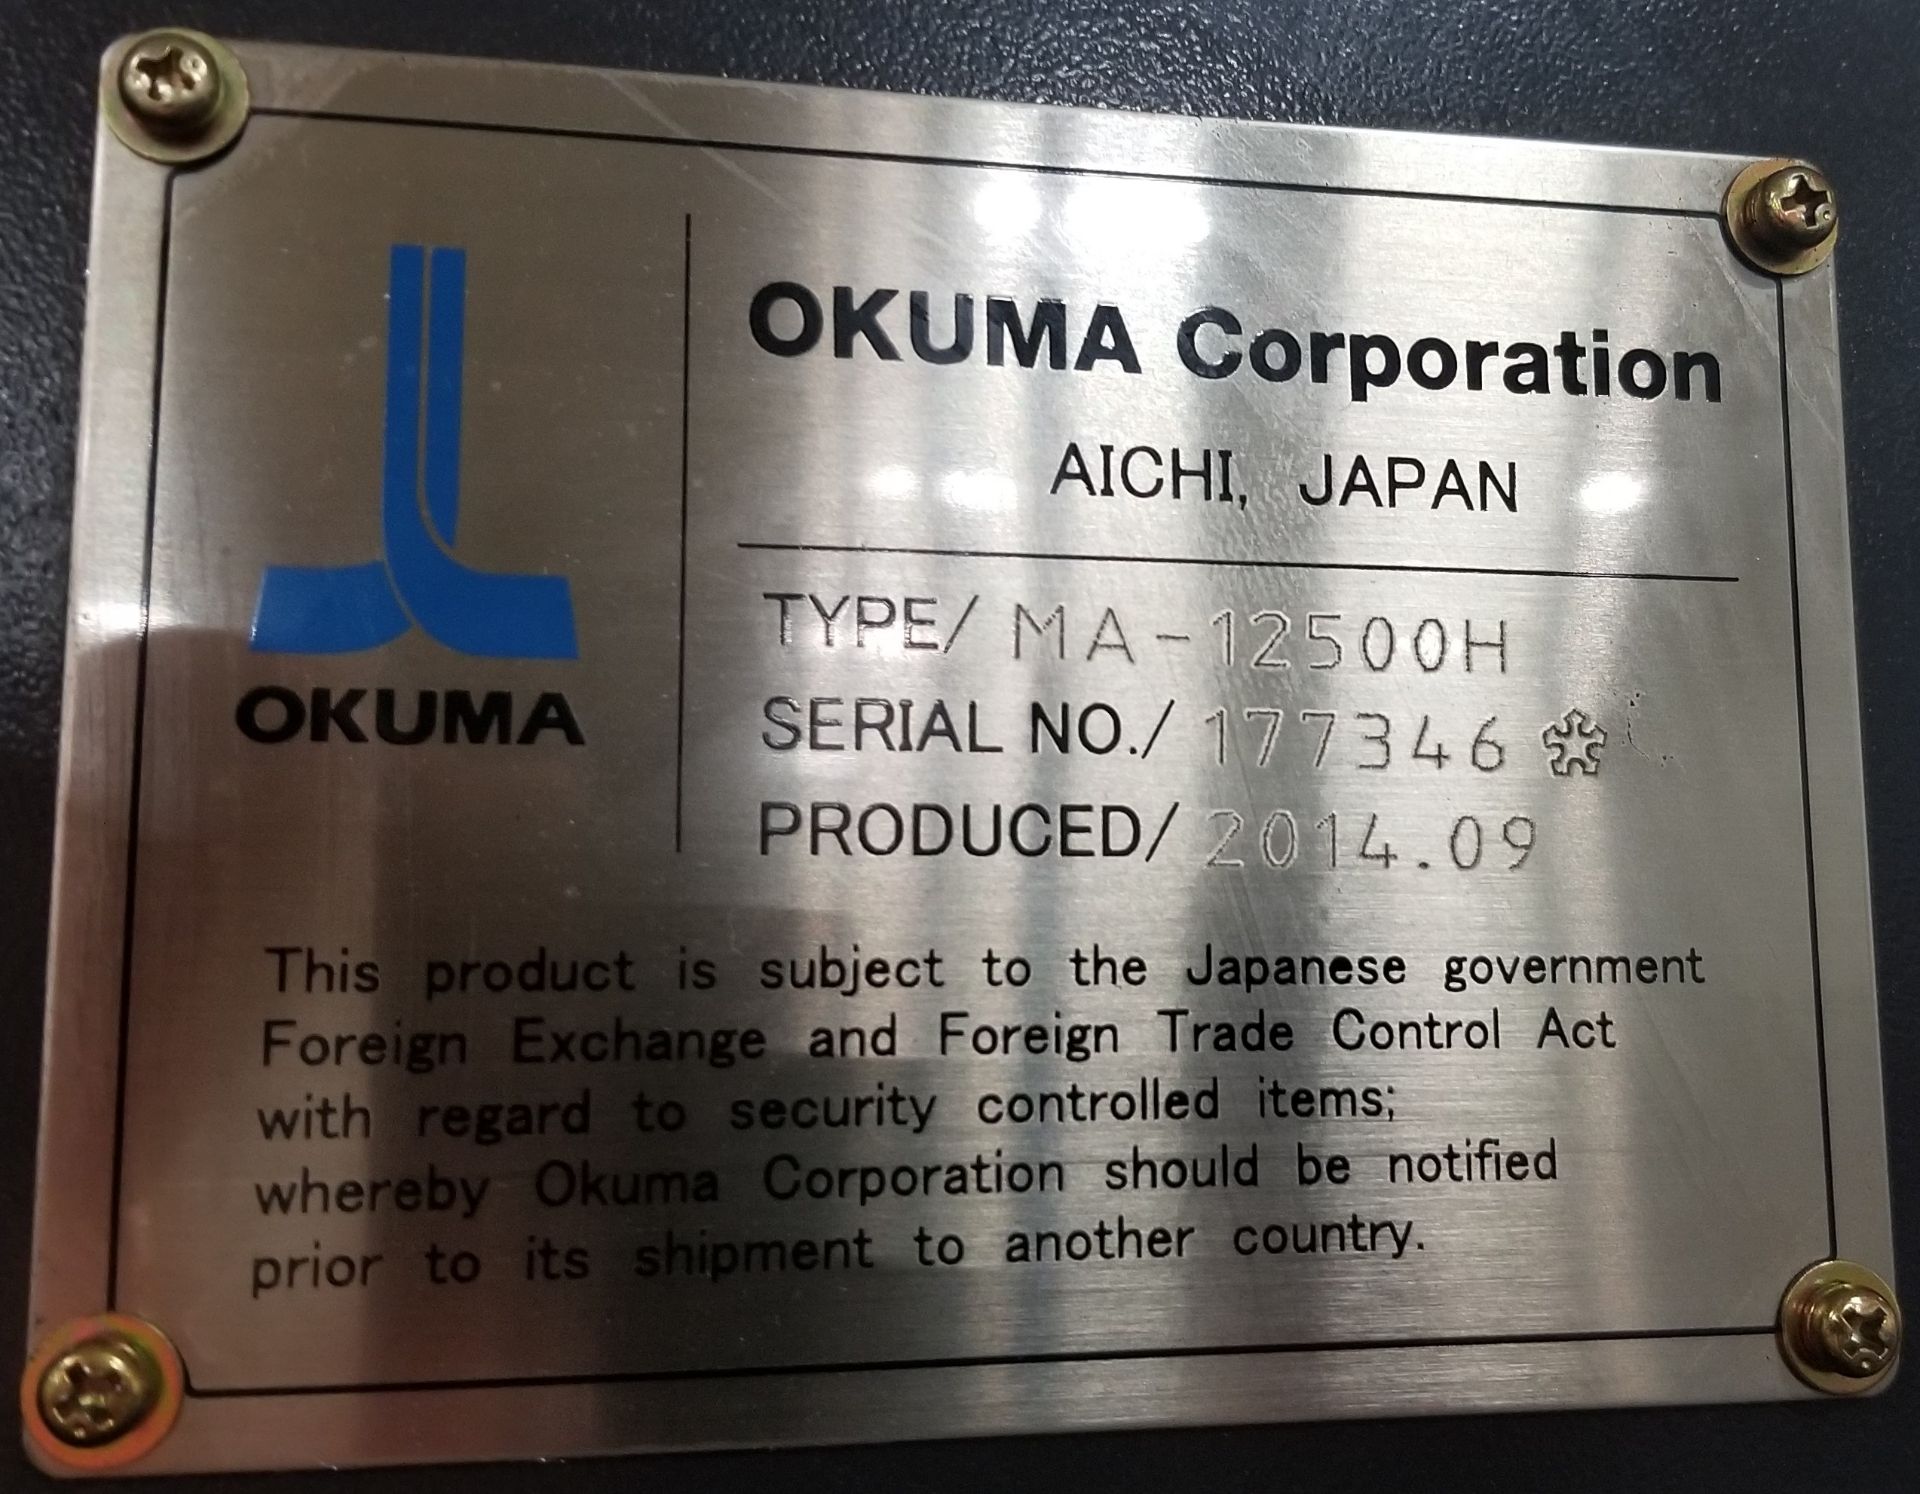 OKUMA (2014) MA-12500H SPACE CENTER TWIN PALLET CNC HORIZONTAL MACHINING CENTER WITH OKUMA - Image 15 of 15